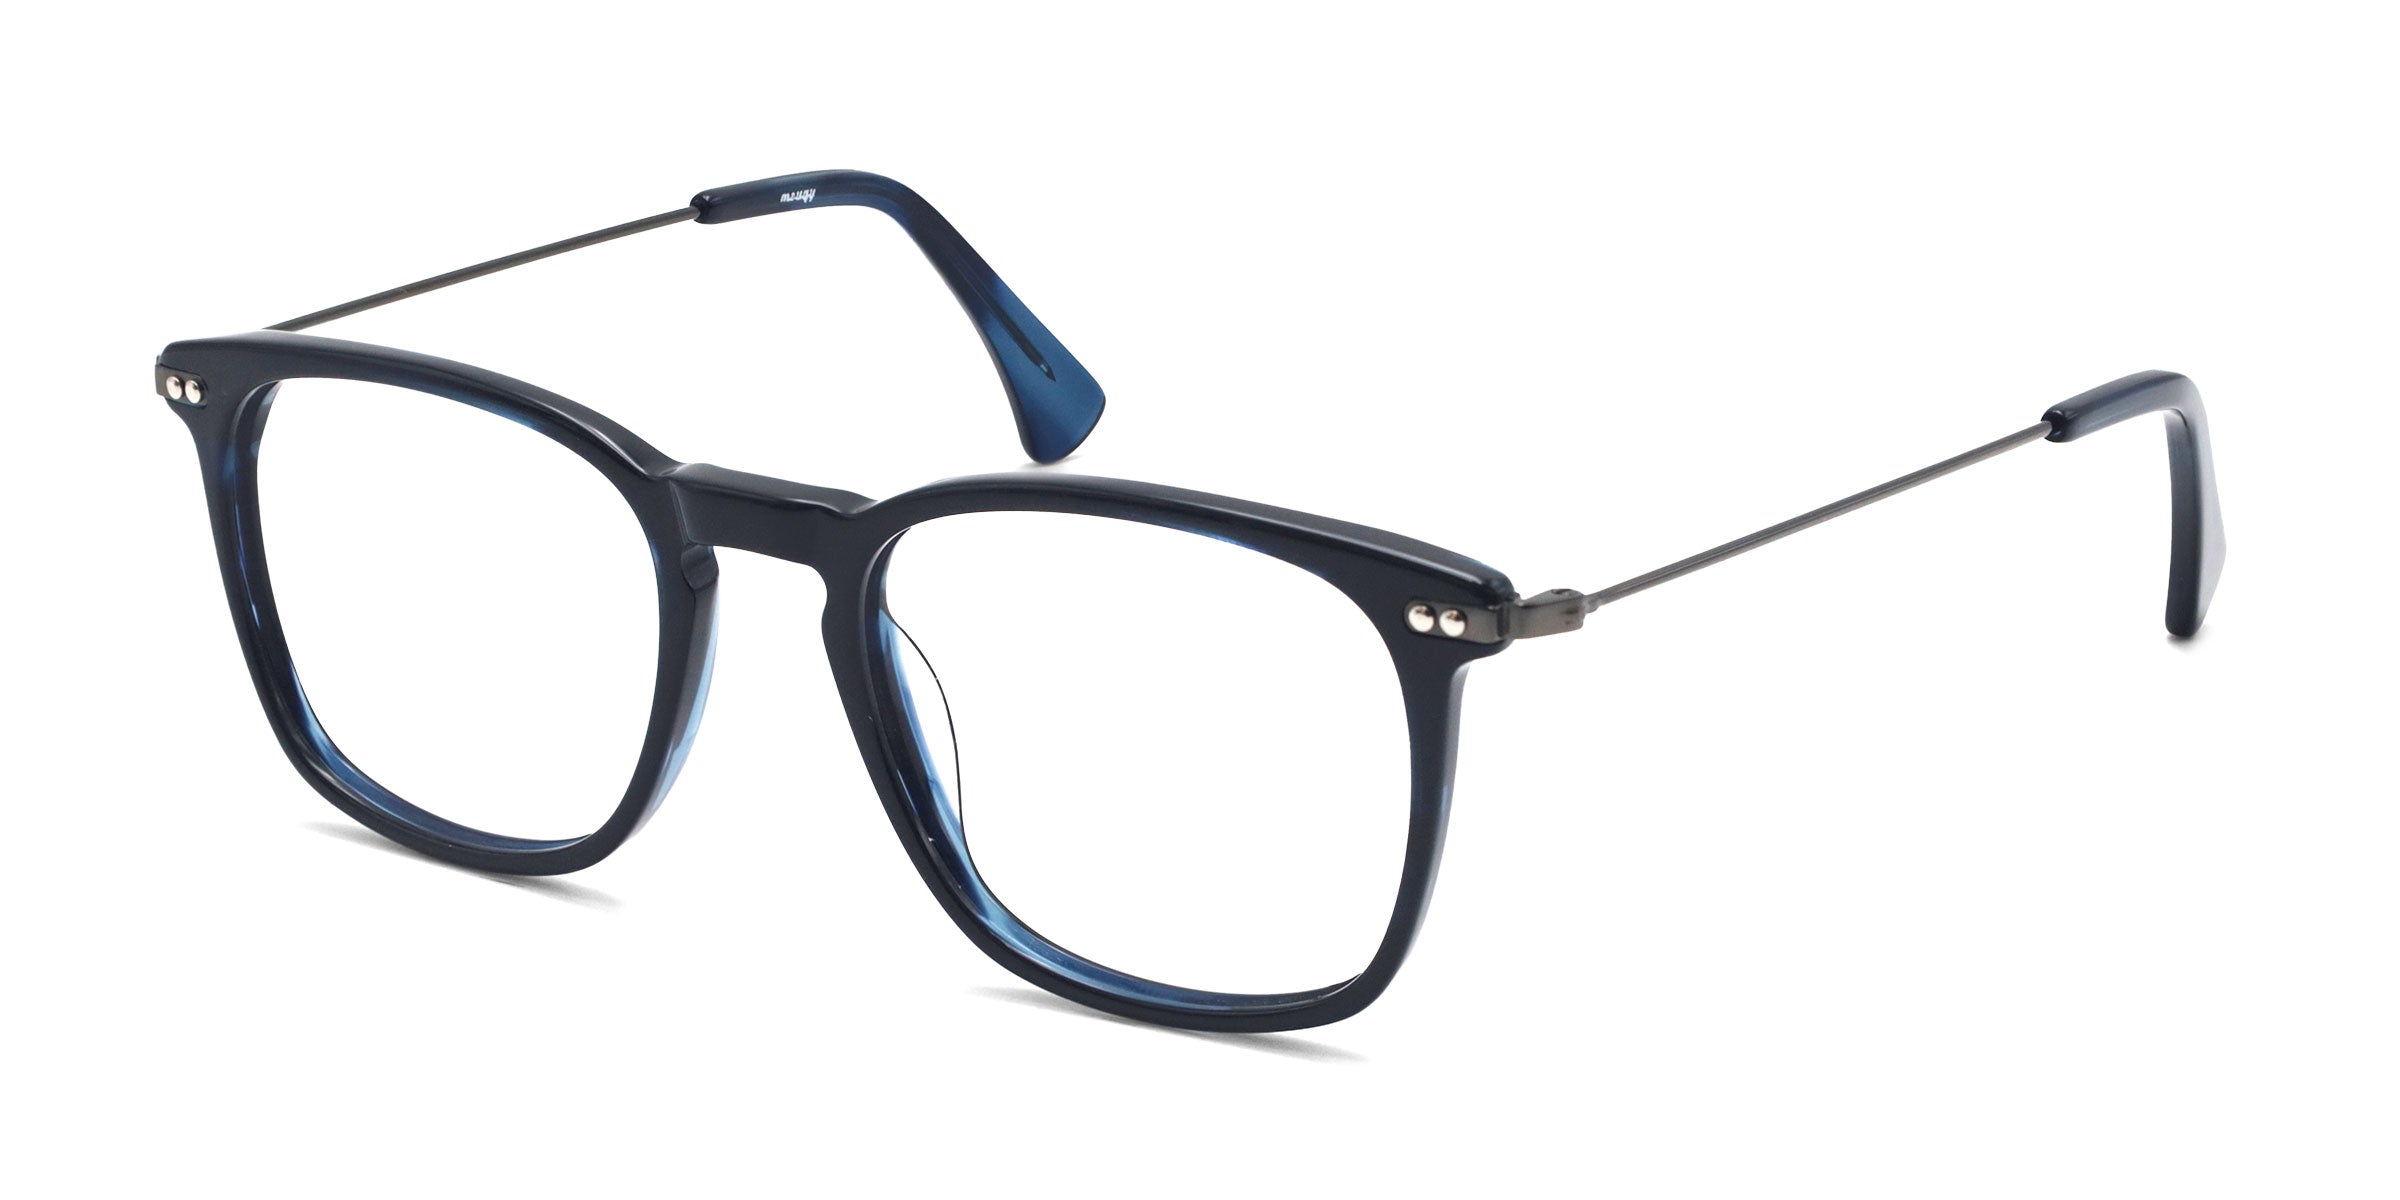 bravo square dark blue eyeglasses frames angled view